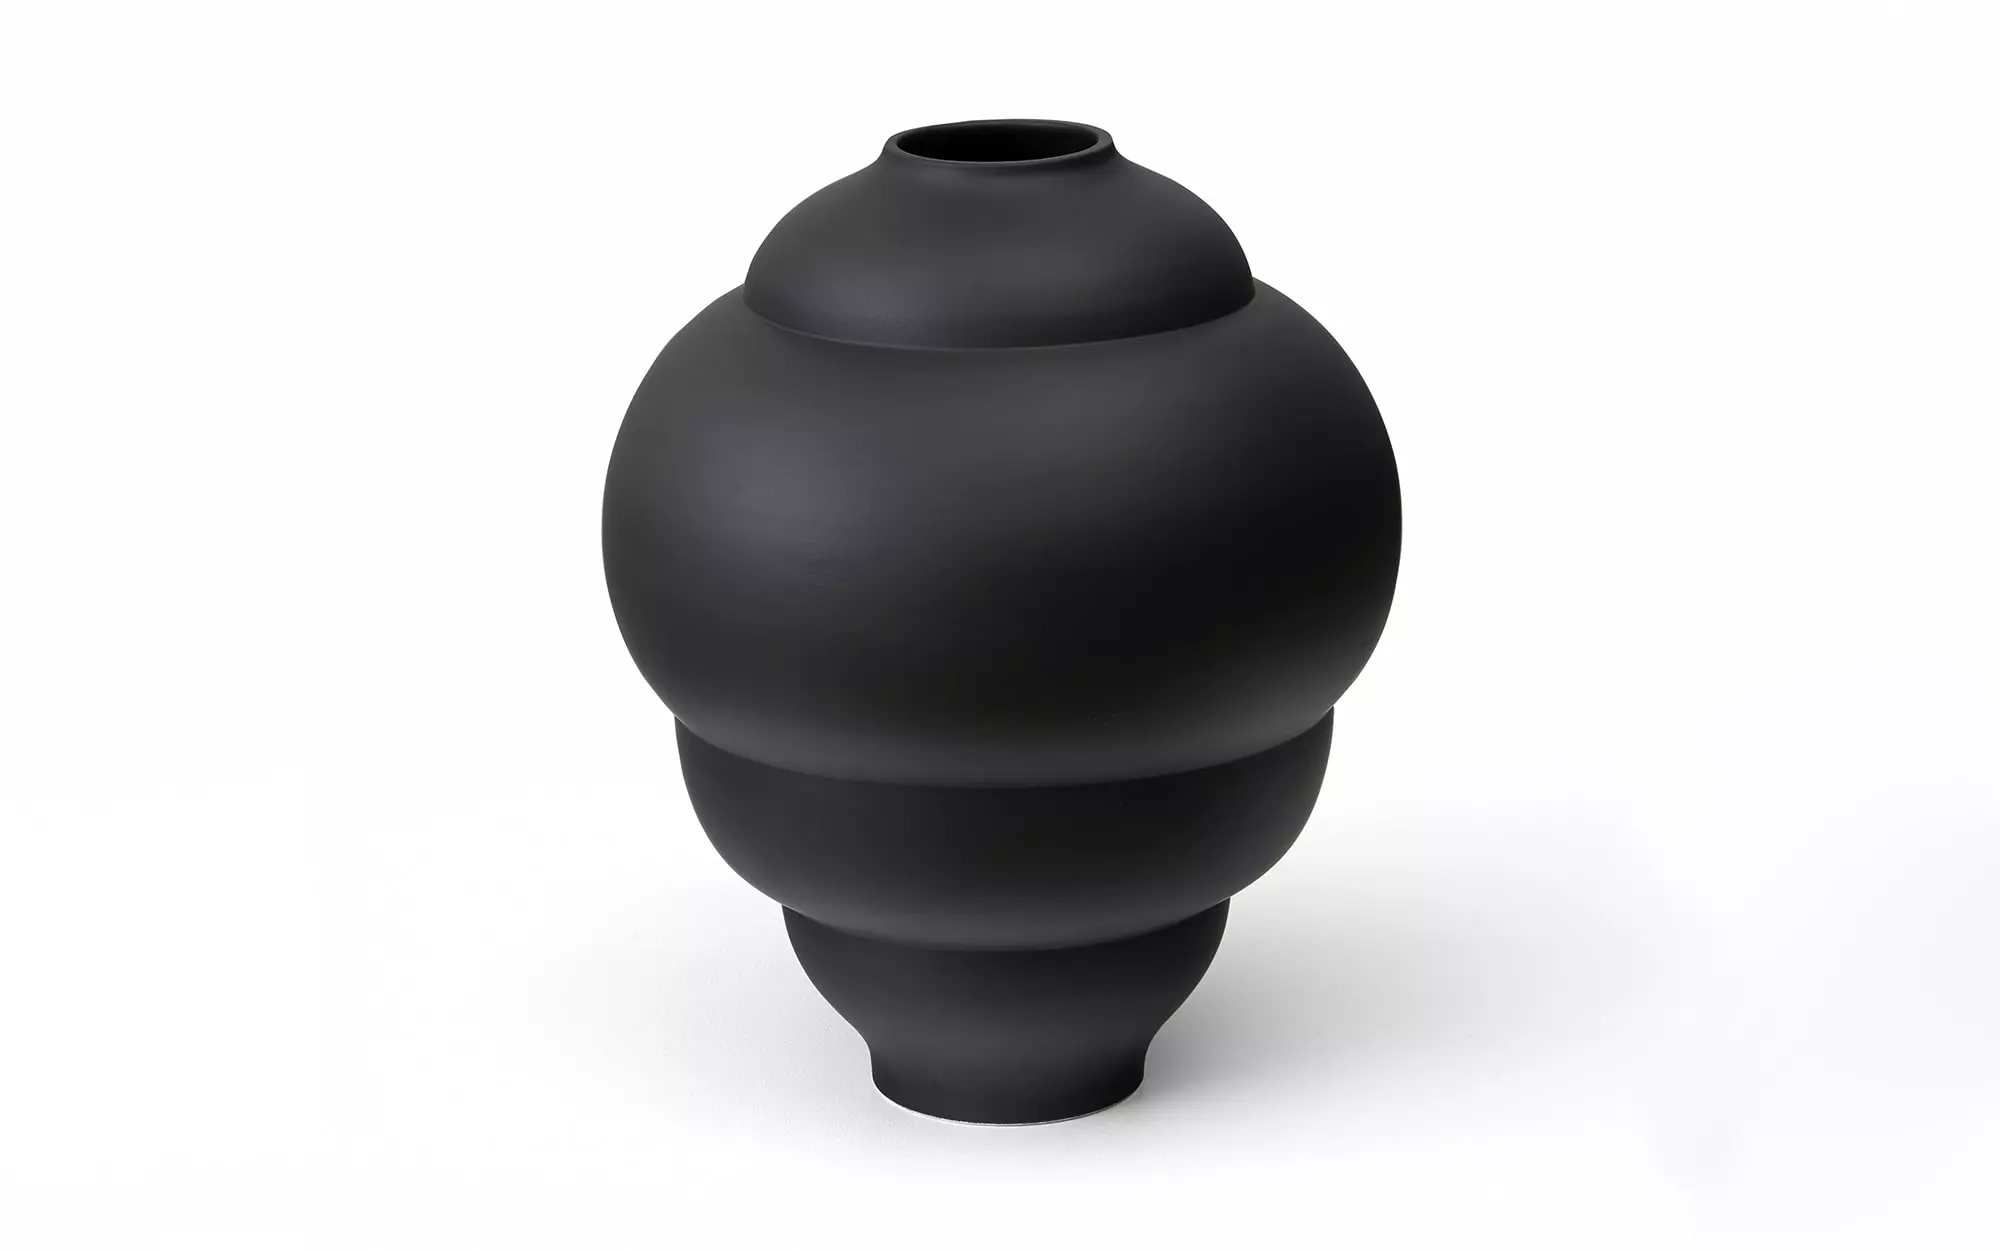 Plump - 3 Vase - Pierre Charpin - Design Miami / Basel 2021.